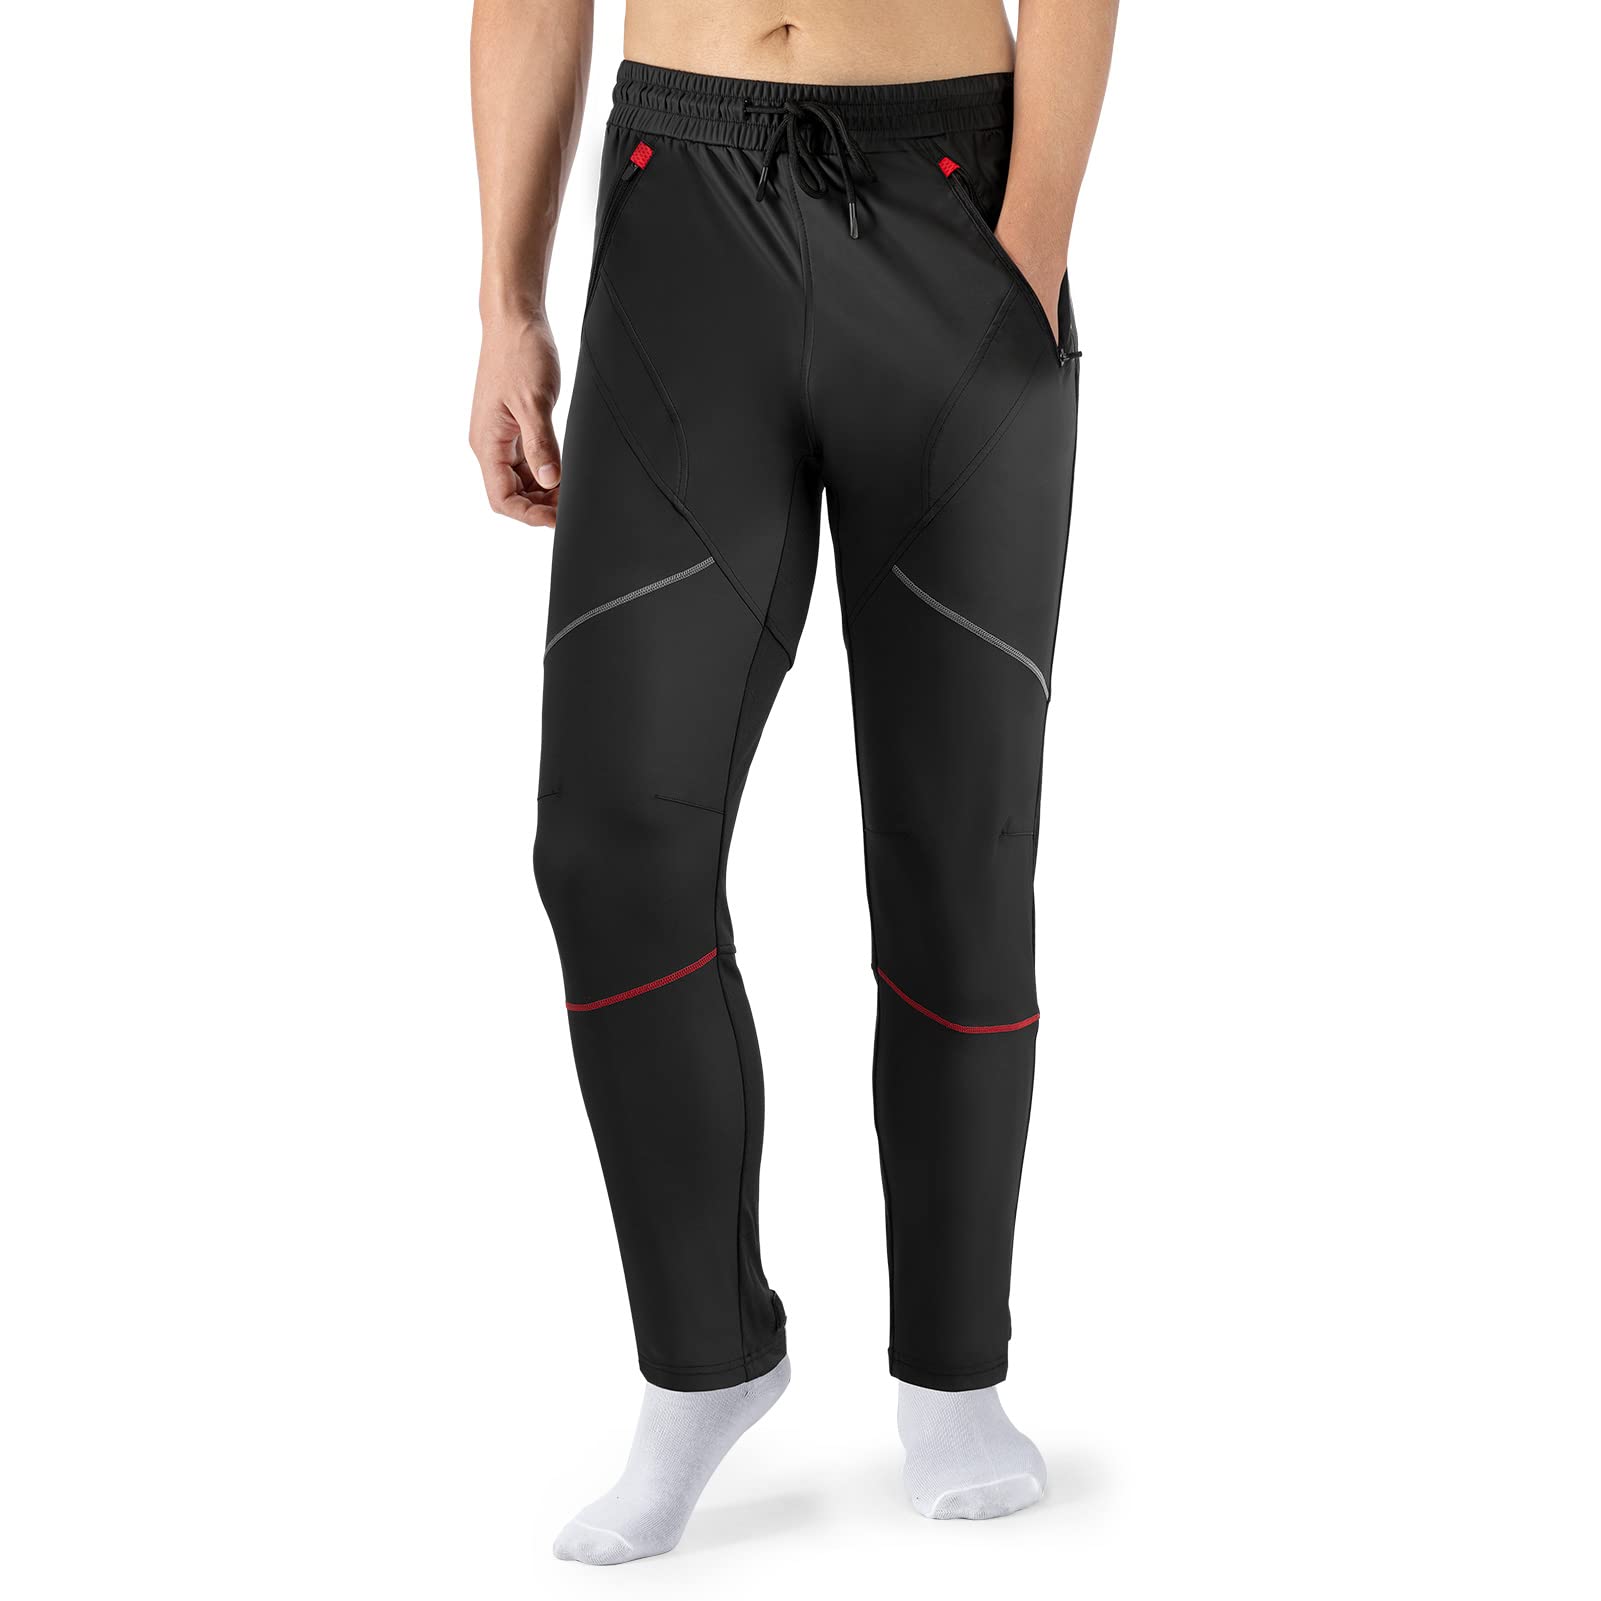 ROCKBROS Men's Black Thermal Long Cycling Pants Windproof & Warm